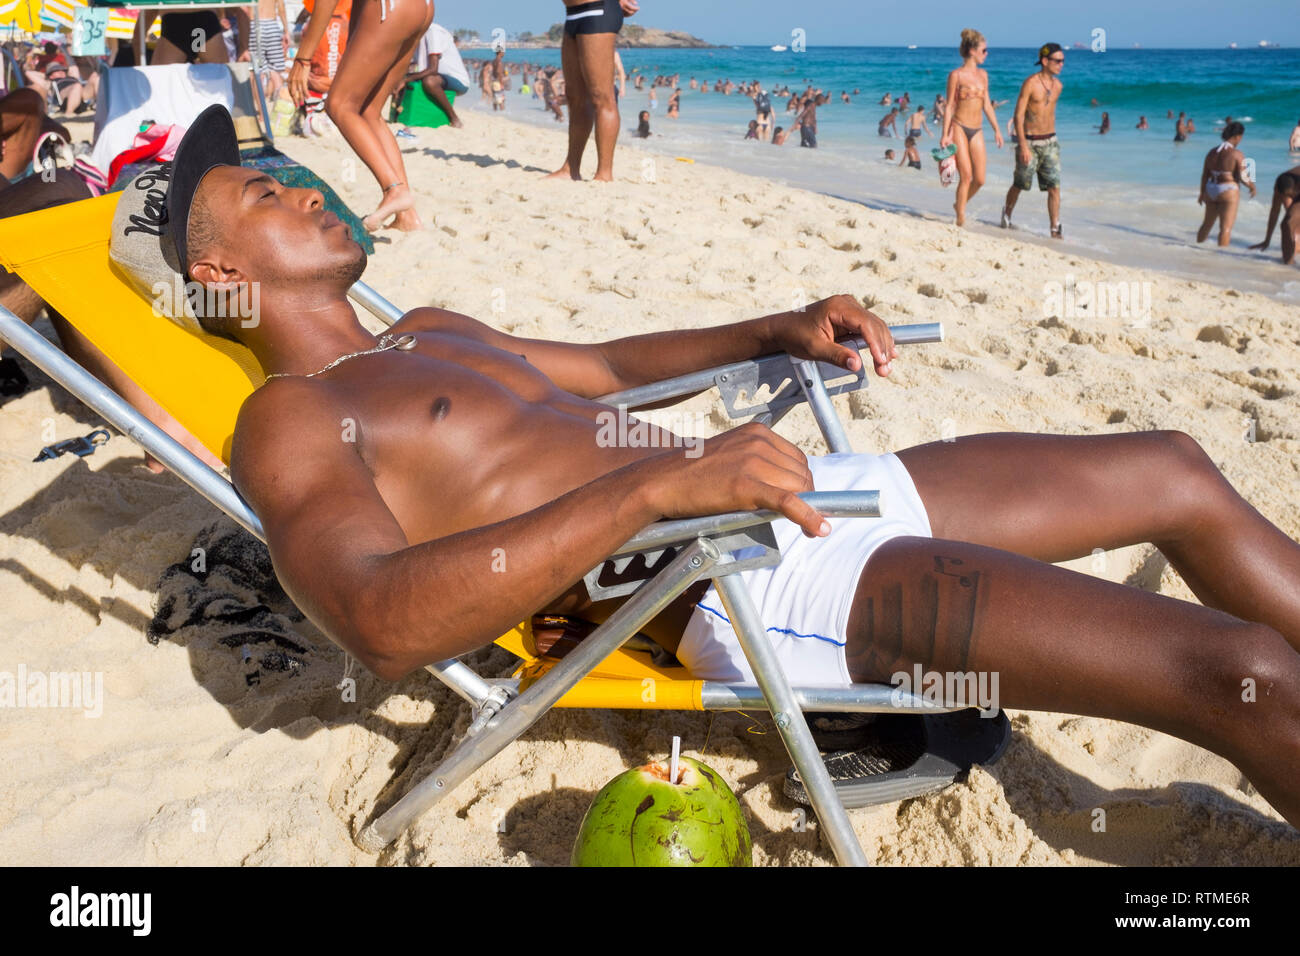 RIO DE JANEIRO - JANUARY 25, 2015: A muscular young Brazilian man lies in a beach chair sunbathing on a bright afternoon on Ipanema Beach. Stock Photo